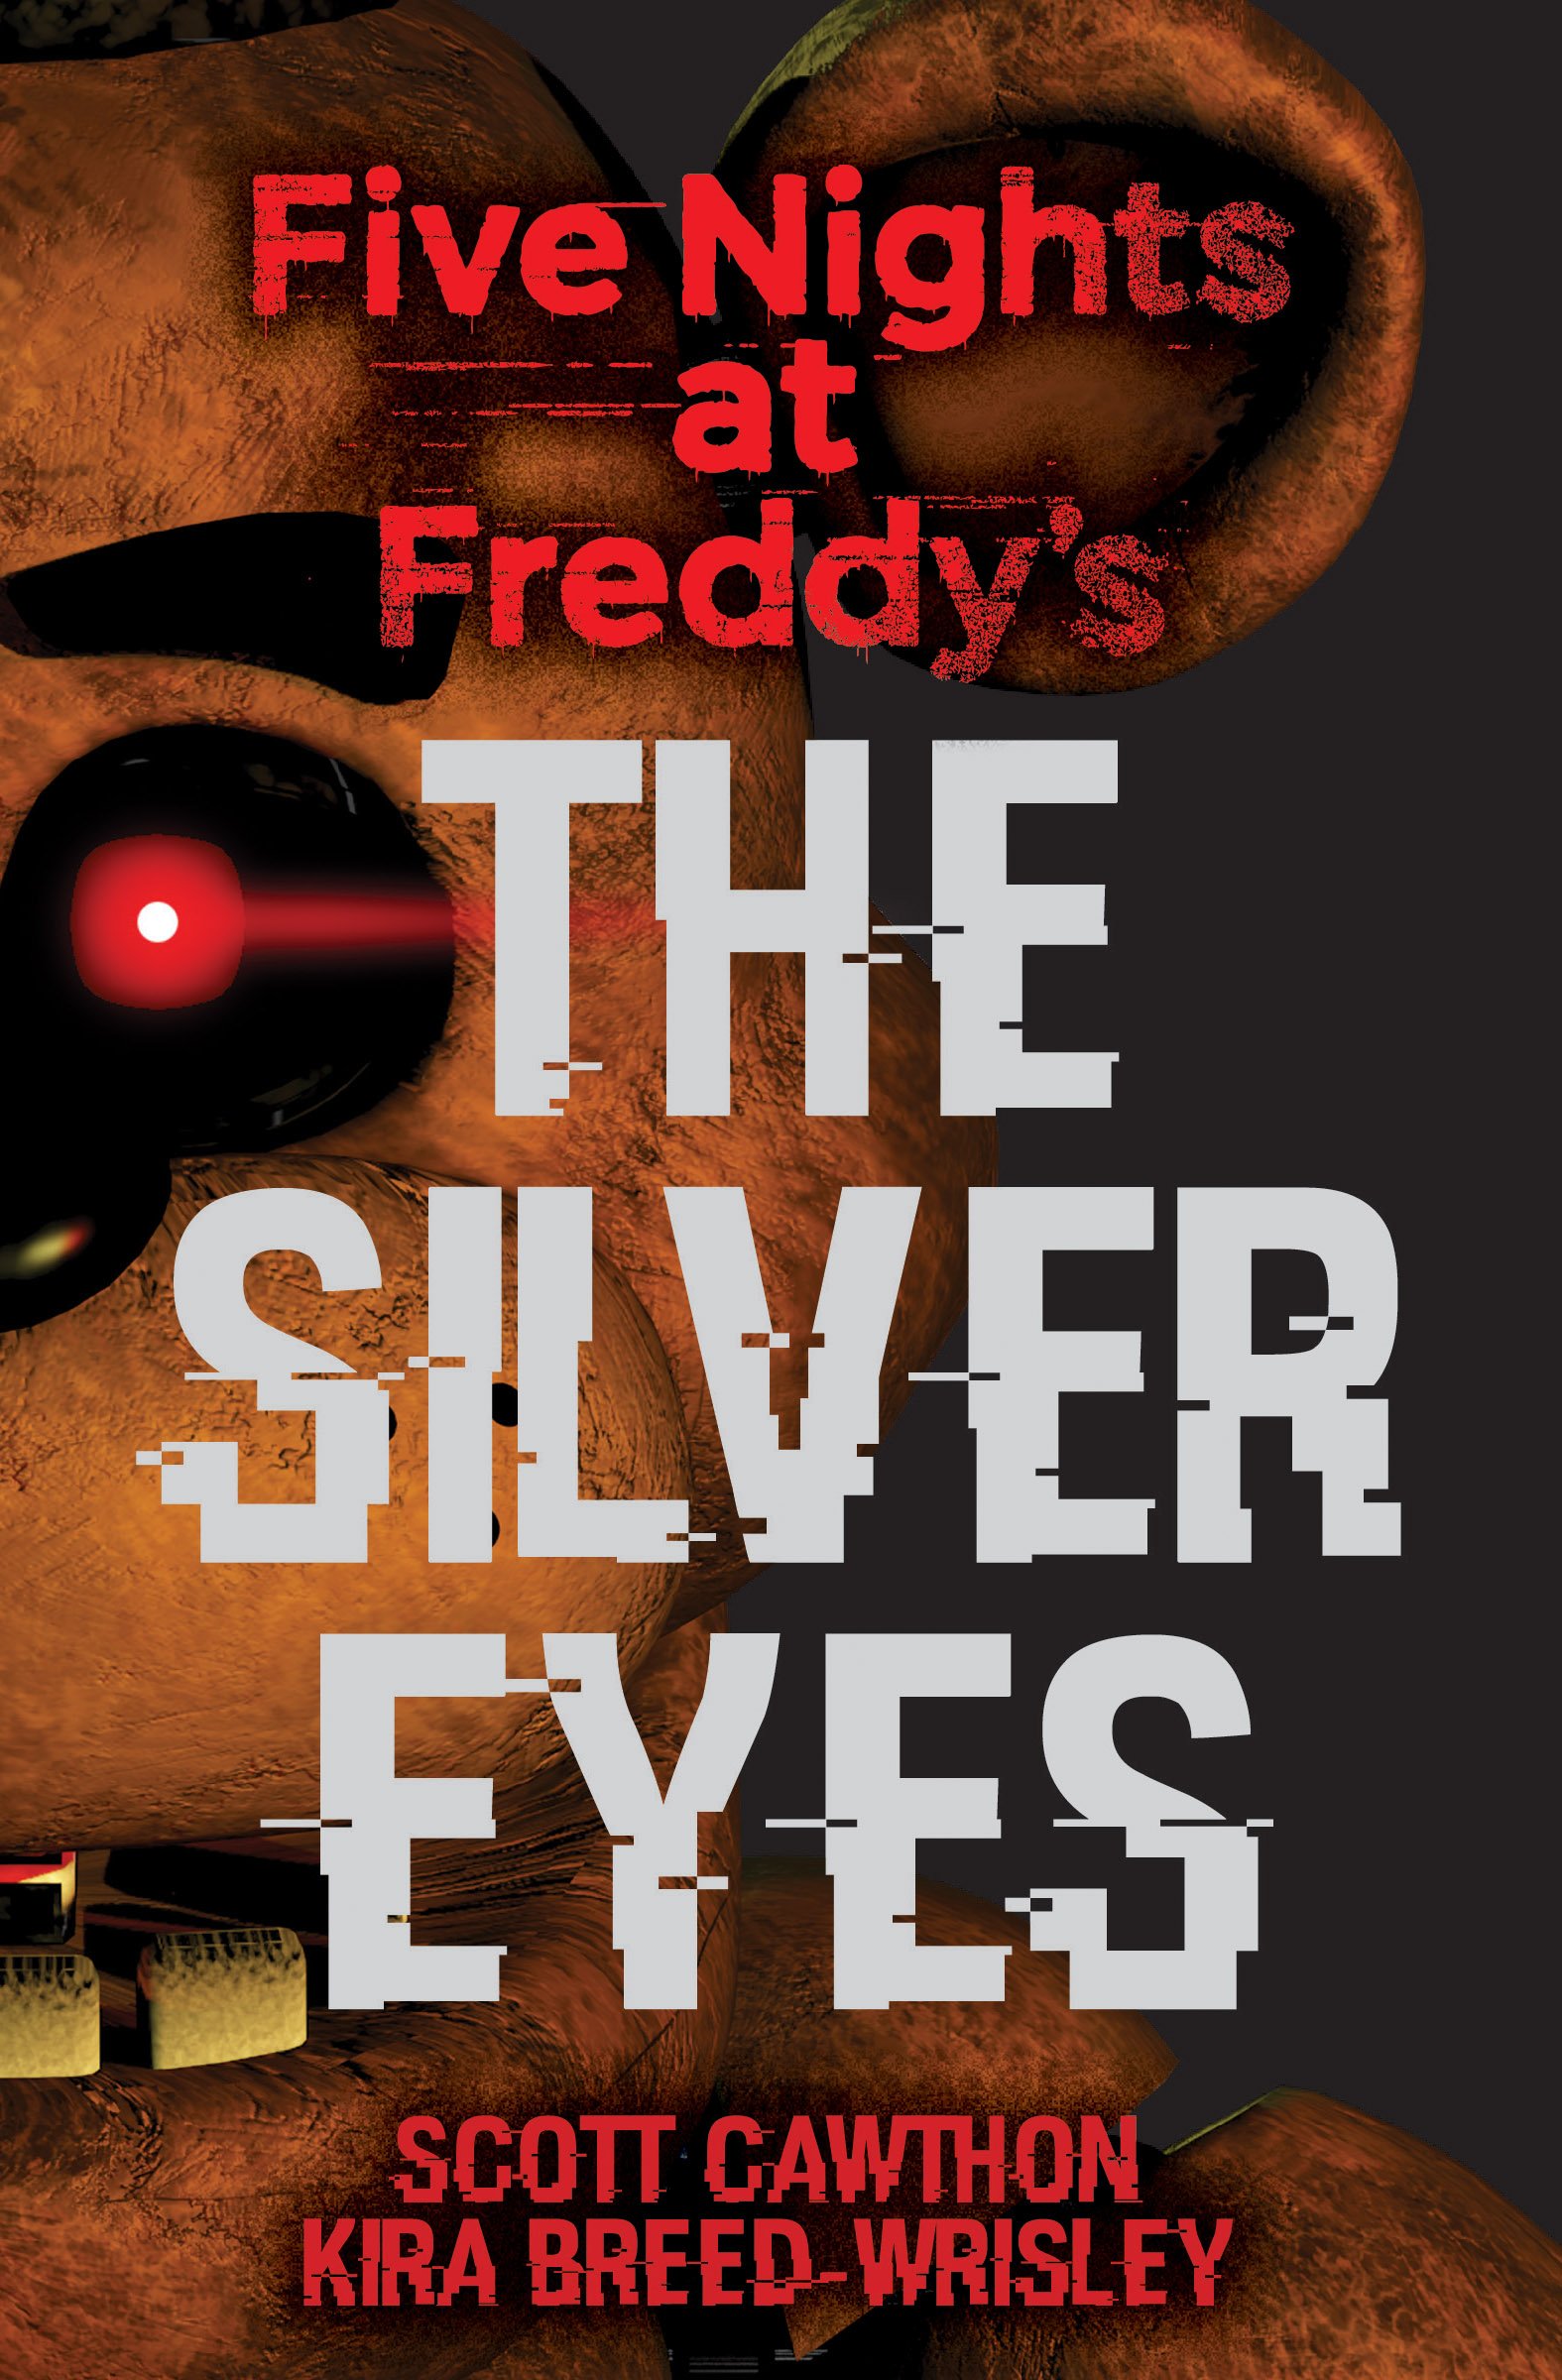 Ｐｒｏｙｅｃｔｏ ＴＬＦ - Five Nights at Freddy's: The Silver Eyes Graphic Novel/Los  Ojos de Plata Novela Gráfica ▷Google Drive PDF:    JPG